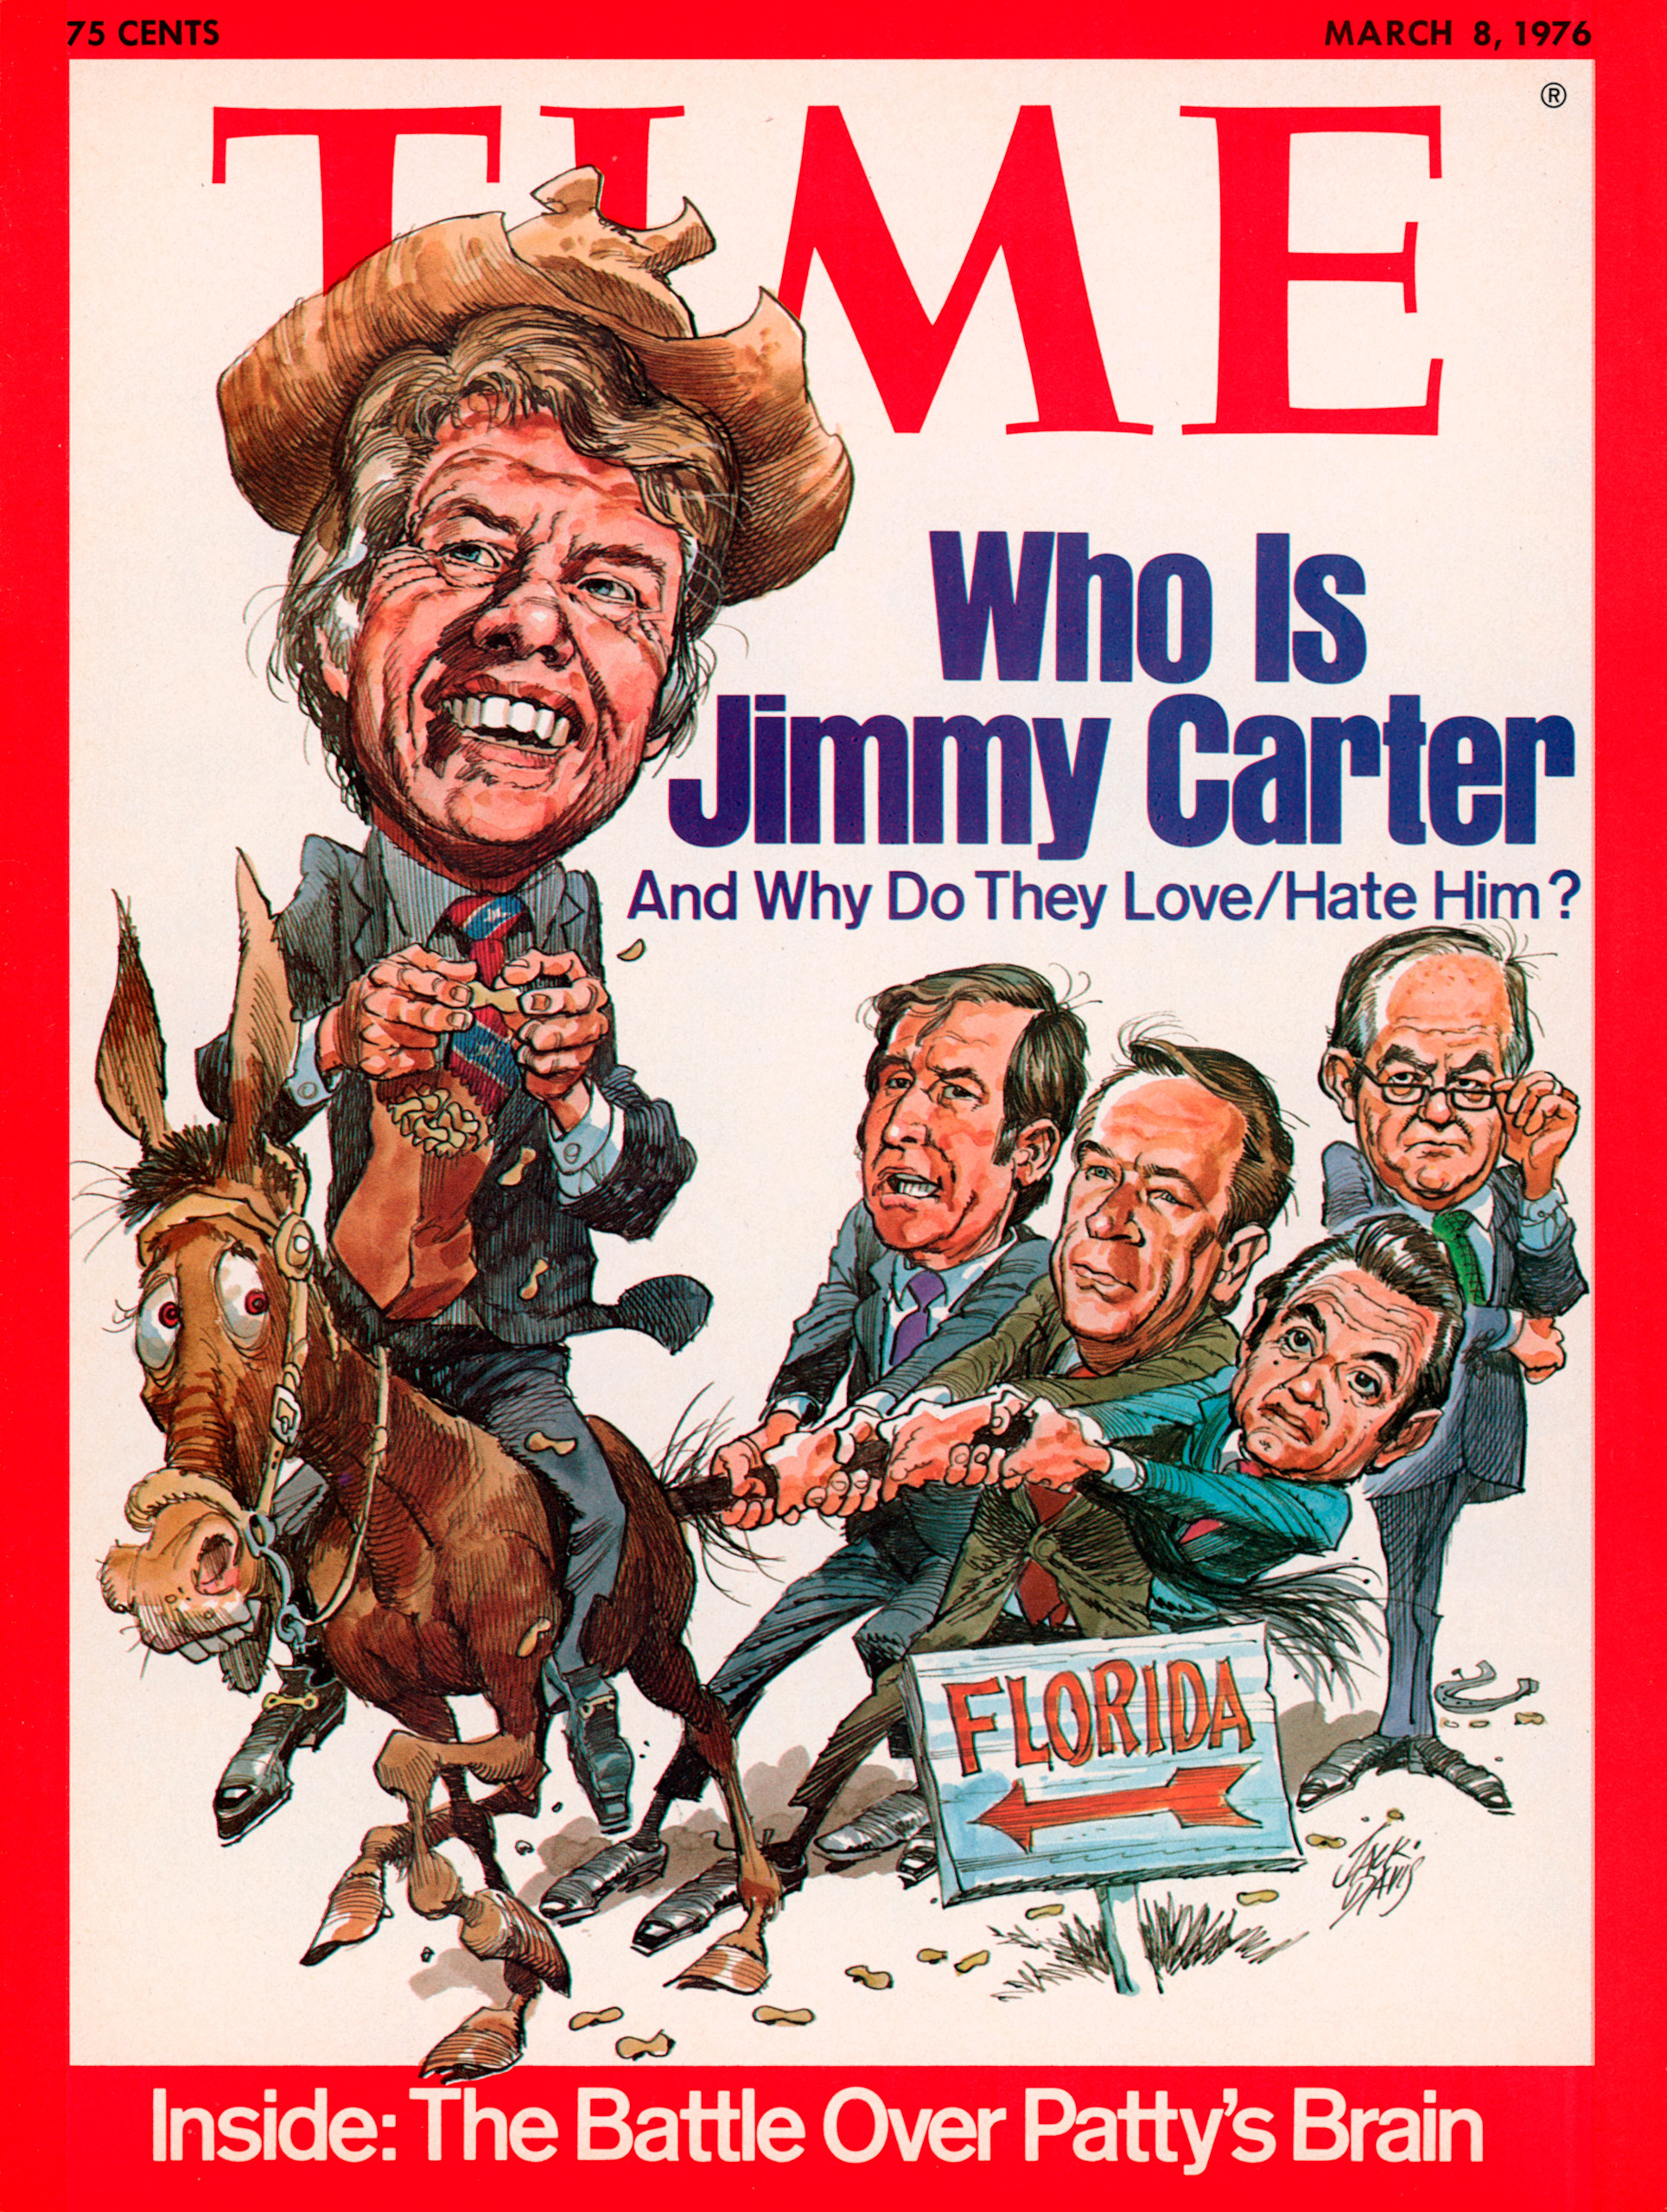 Cartoonist Jack Davis cover of TIME magazine.